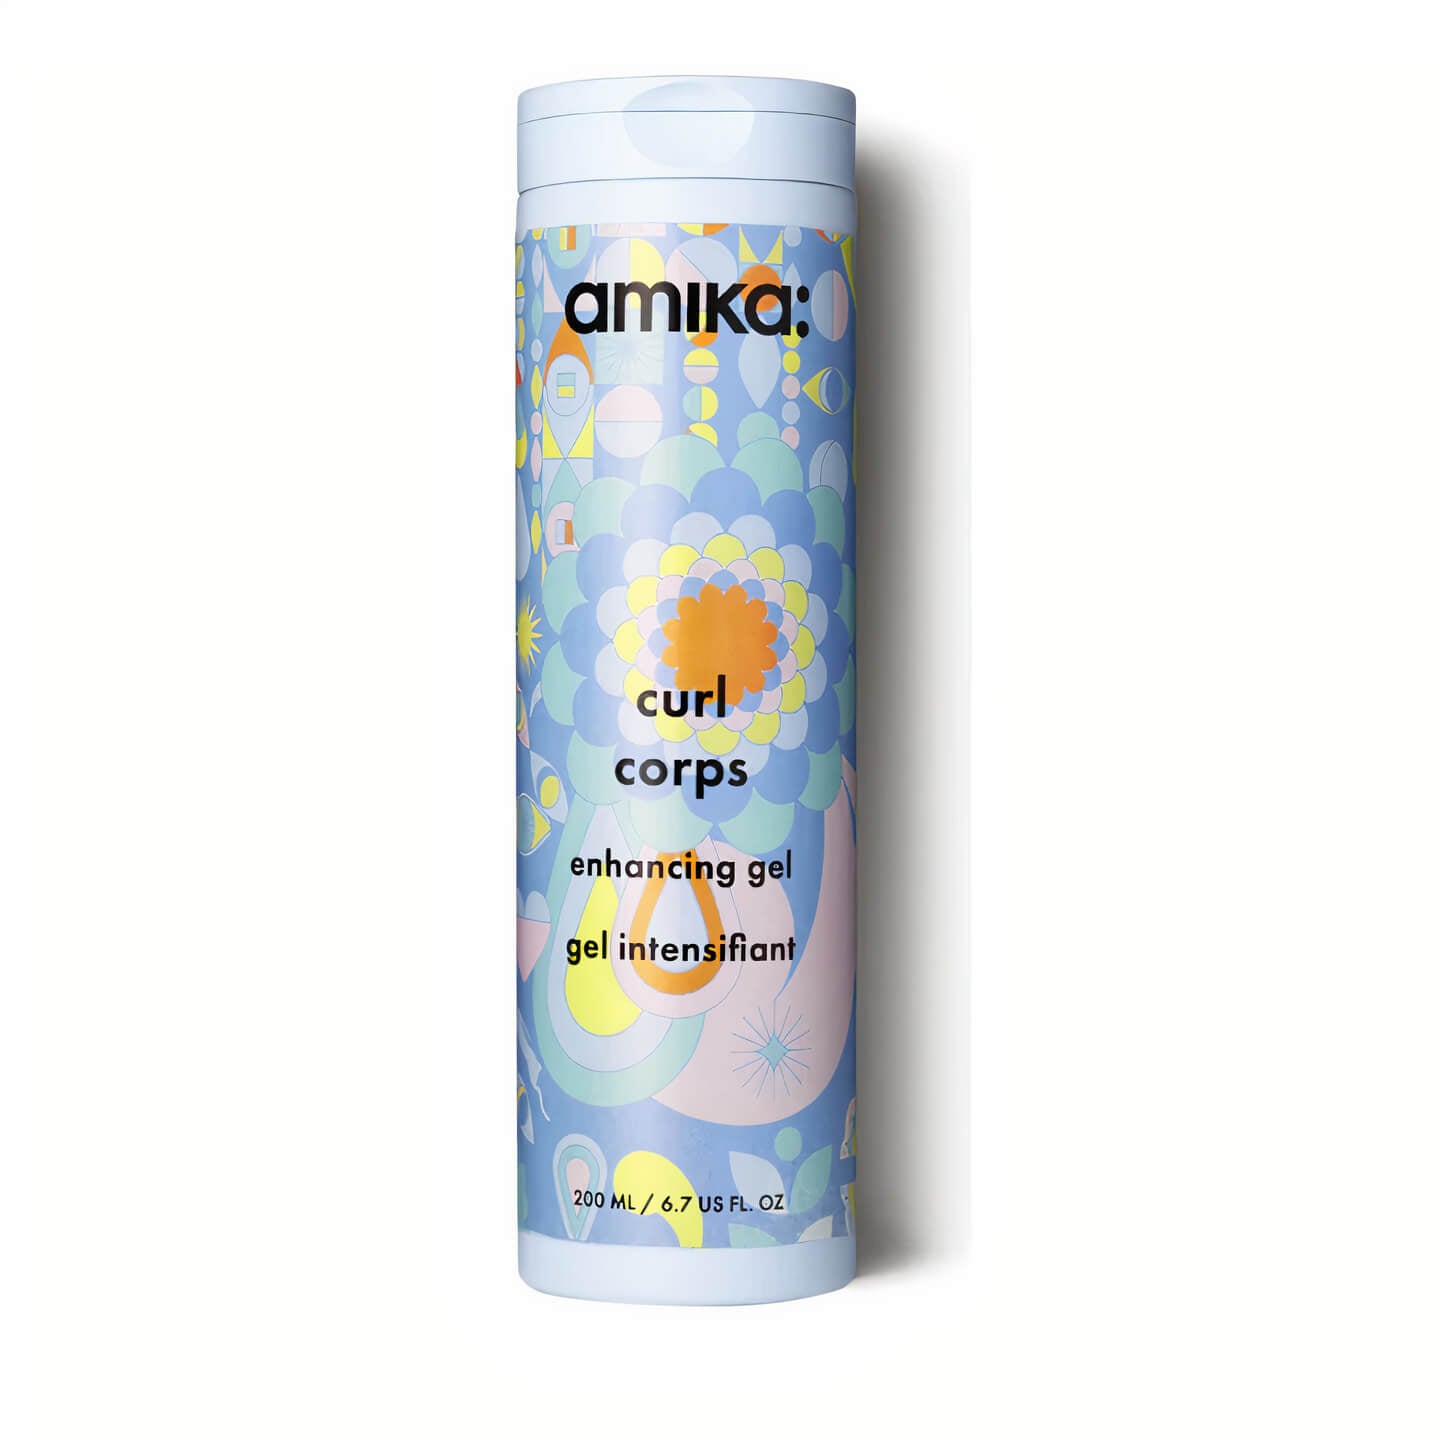 Amika: Curl Corps Enhancing Gel